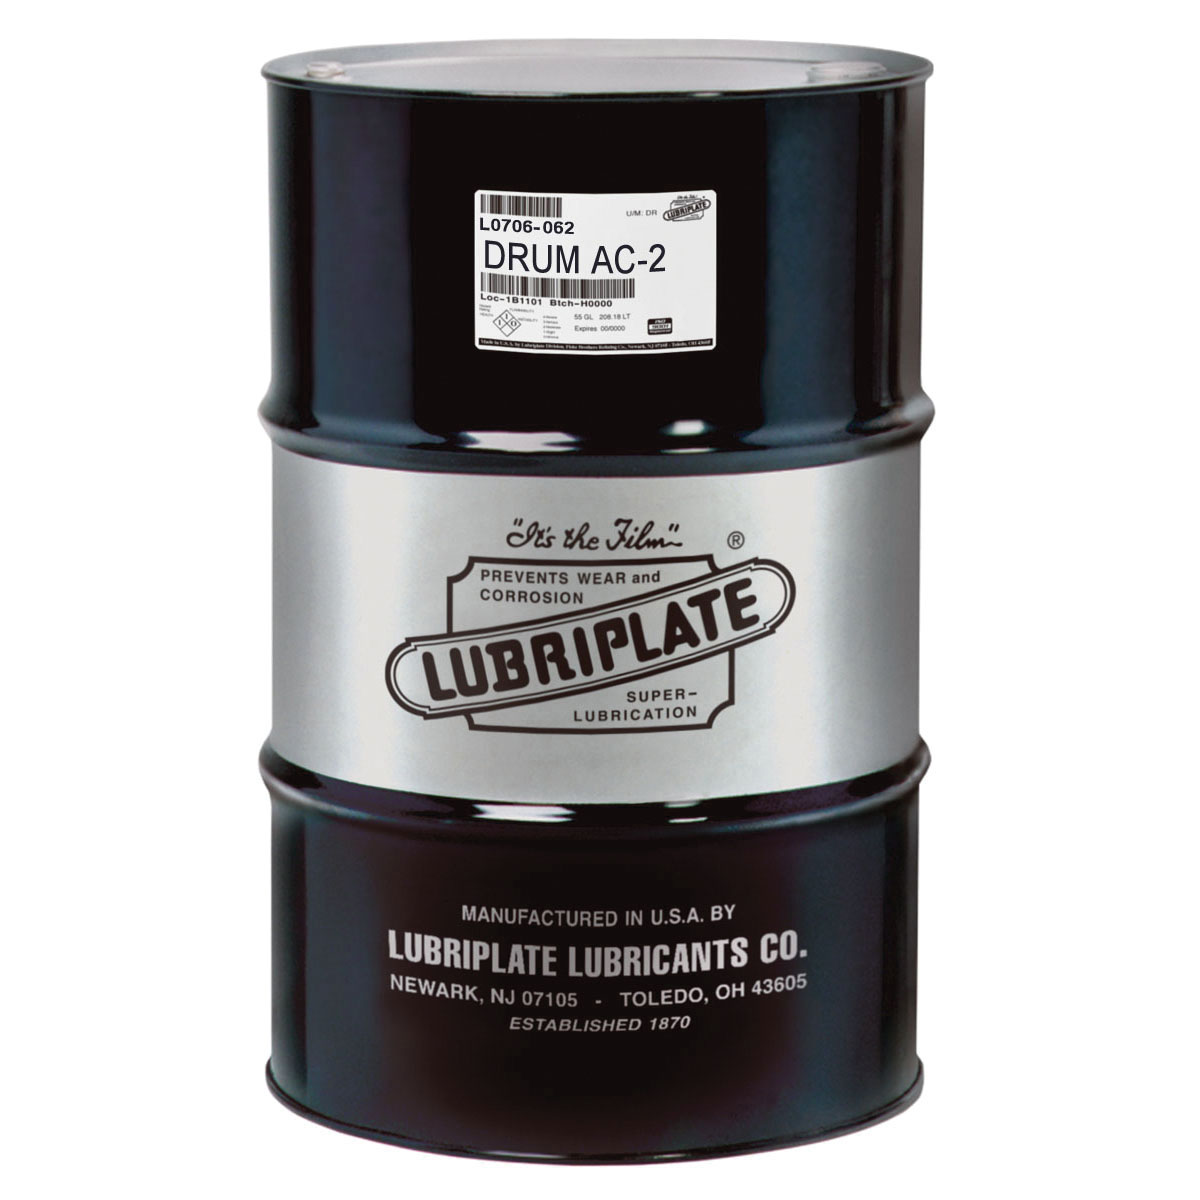 Lubriplate® L0706-062 AC-2 Anti-Wear Petroleum Based Air Compressor Oil, 55 gal Drum, Mineral Oil Odor/Scent, Liquid Form, Amber